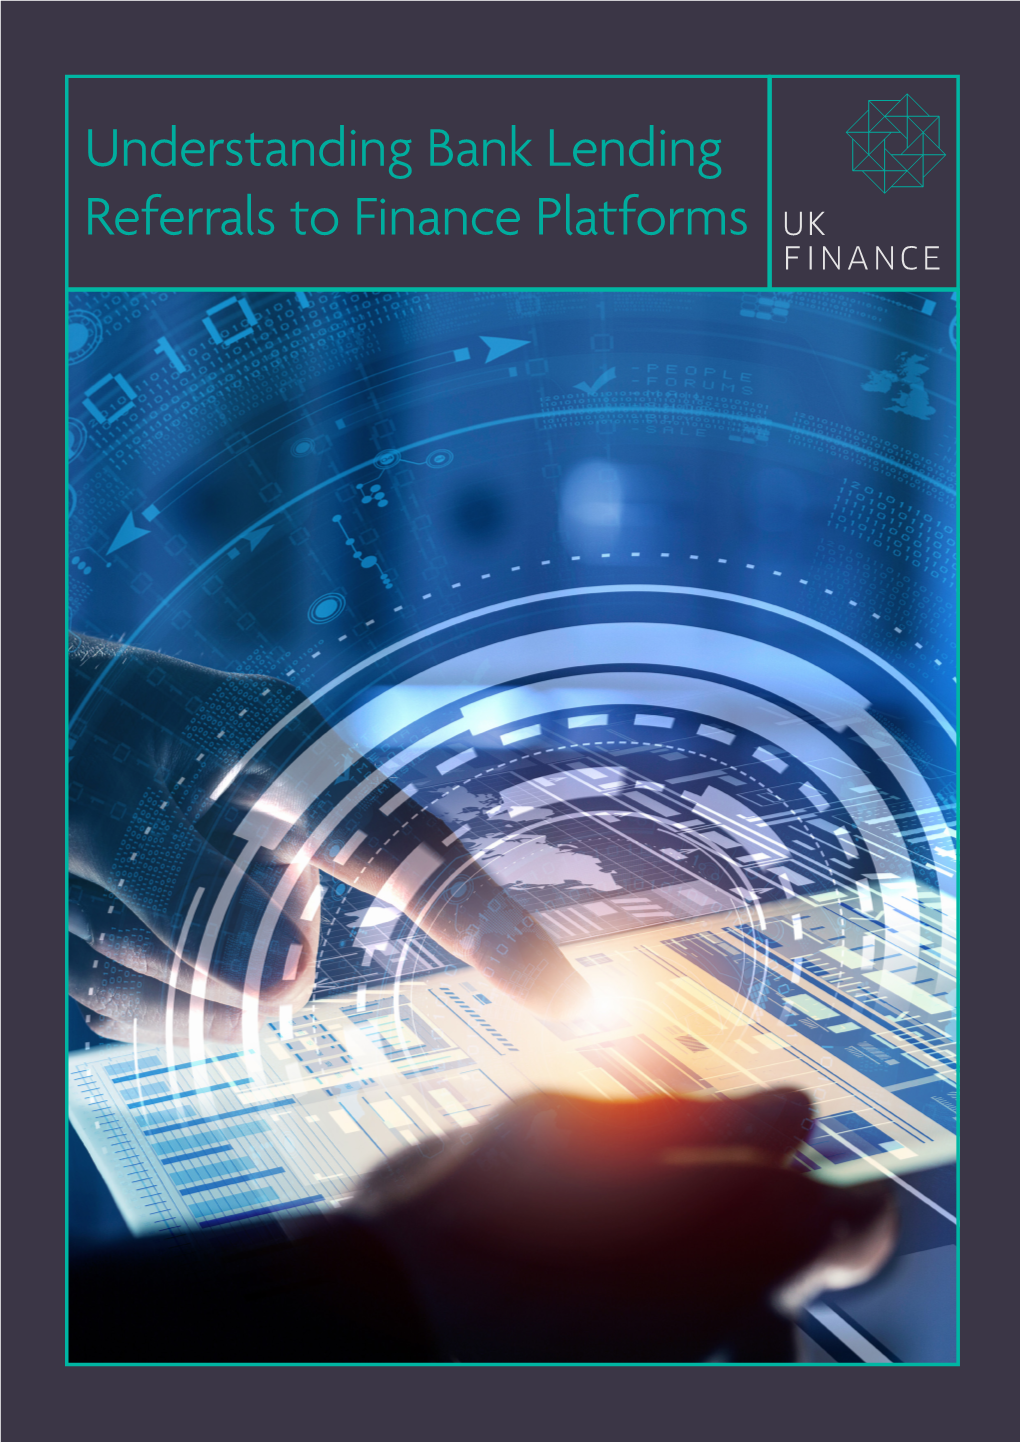 Understanding Bank Referrals to Finance Platforms